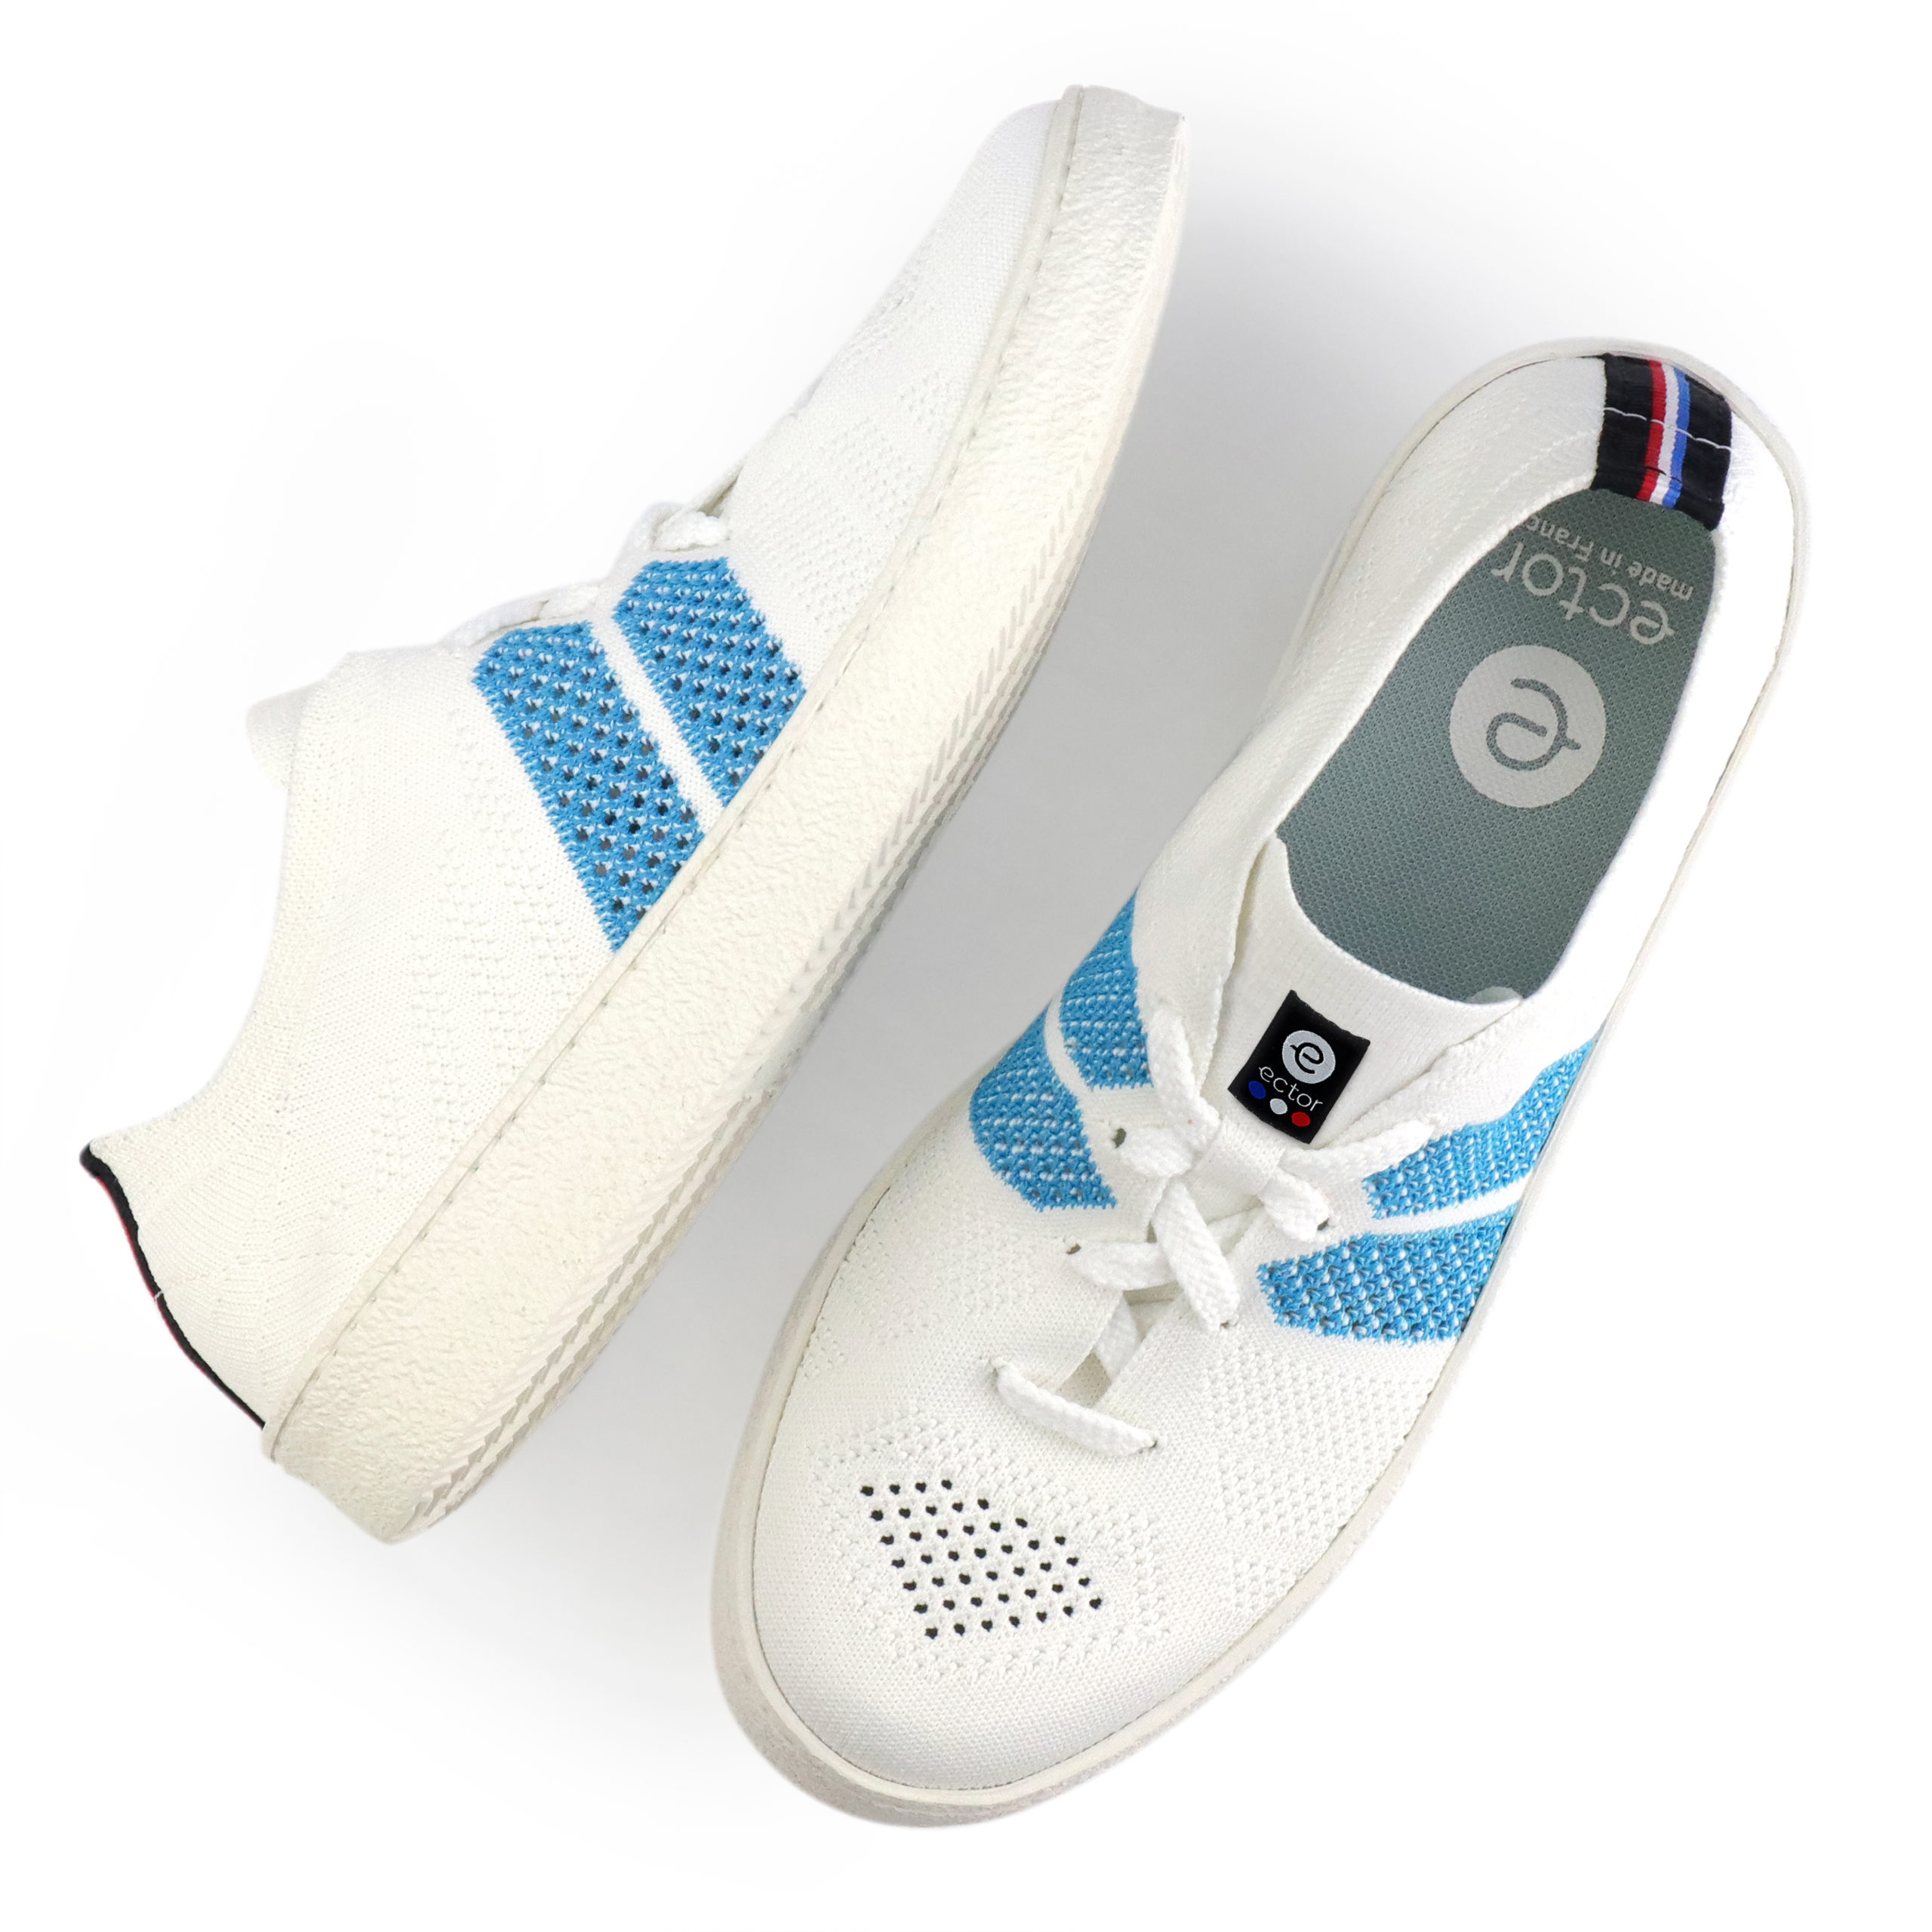 Sneakers blanche et bleu Made in France conçues par Ector Sneakers